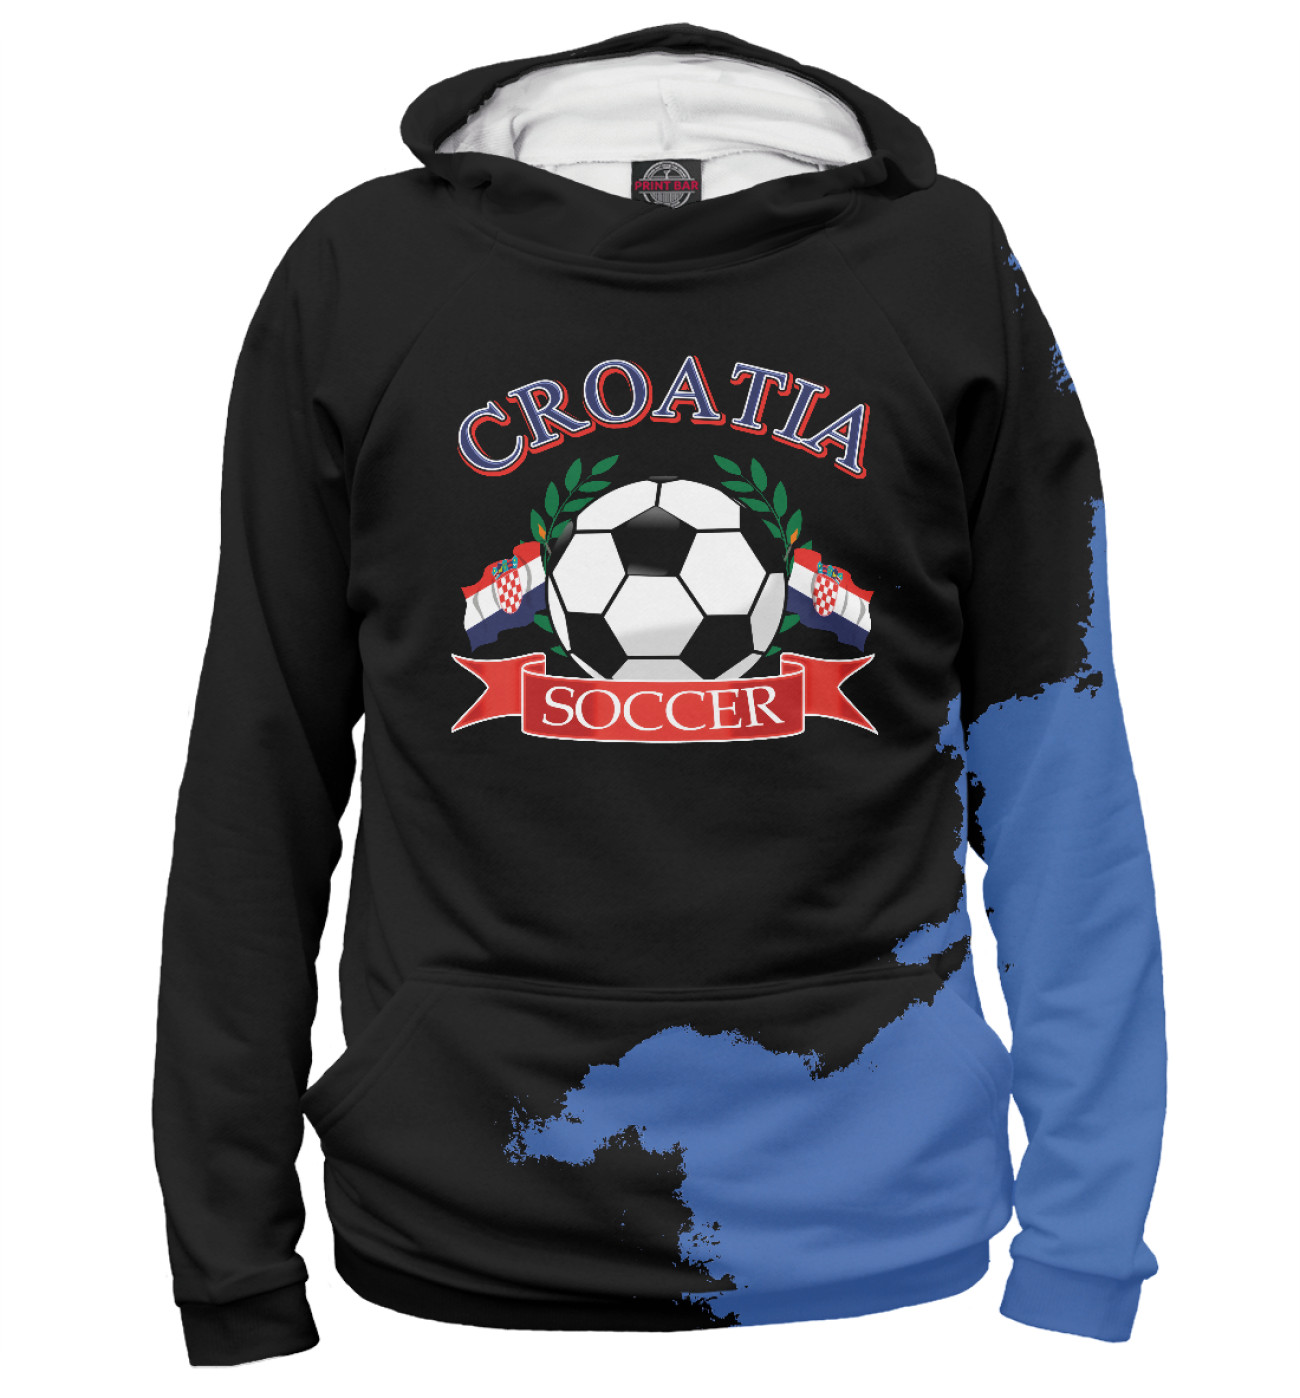 Мужское Худи Croatia soccer ball, артикул: FTO-670002-hud-2